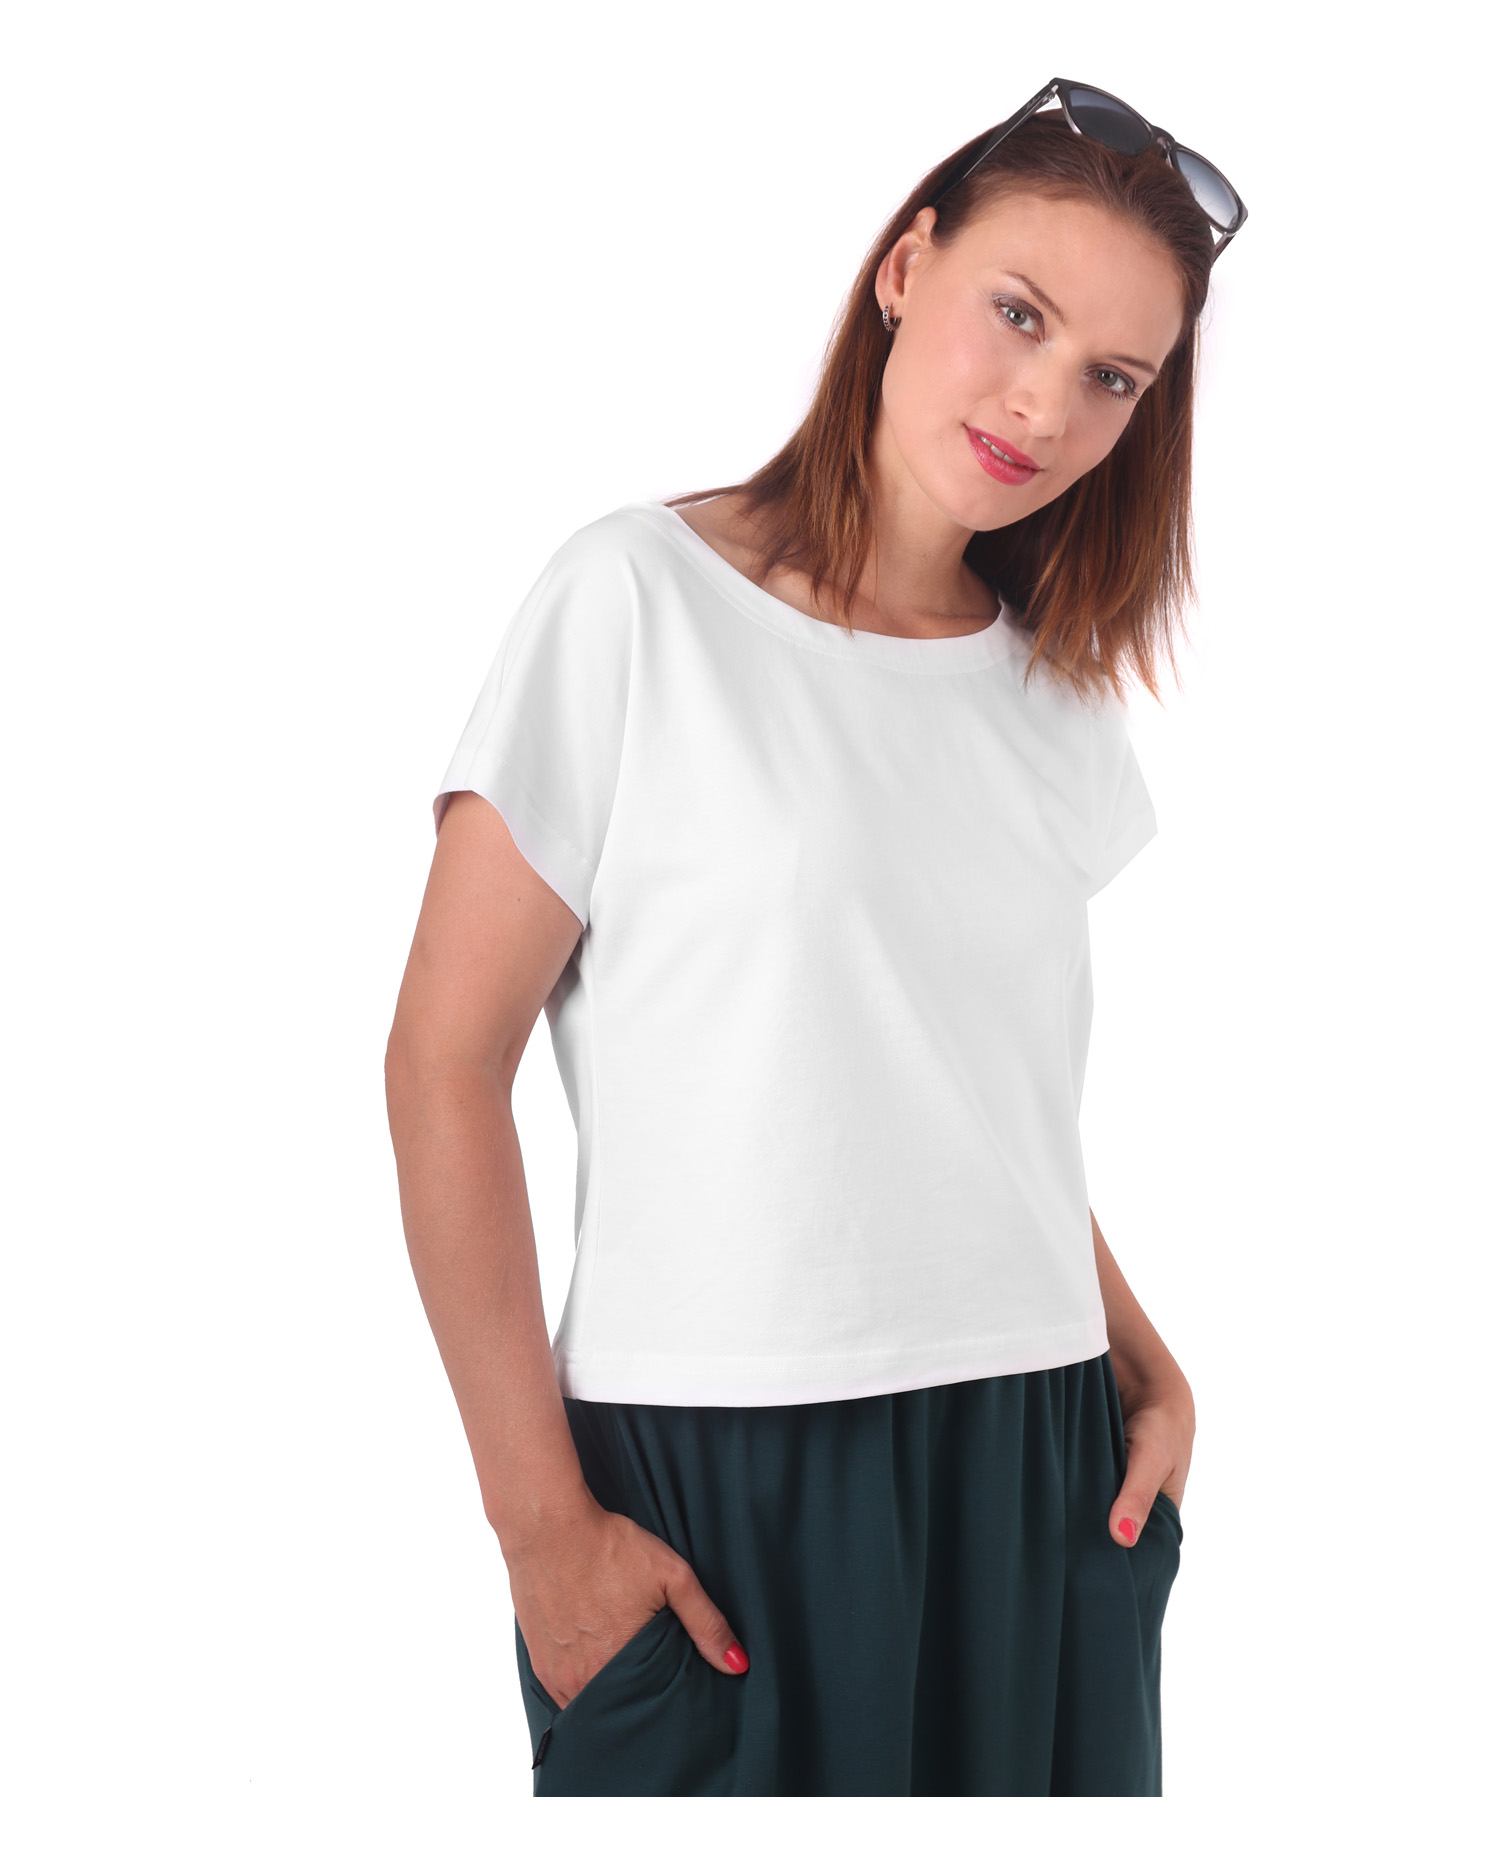 Crop top T-shirt Edita, white